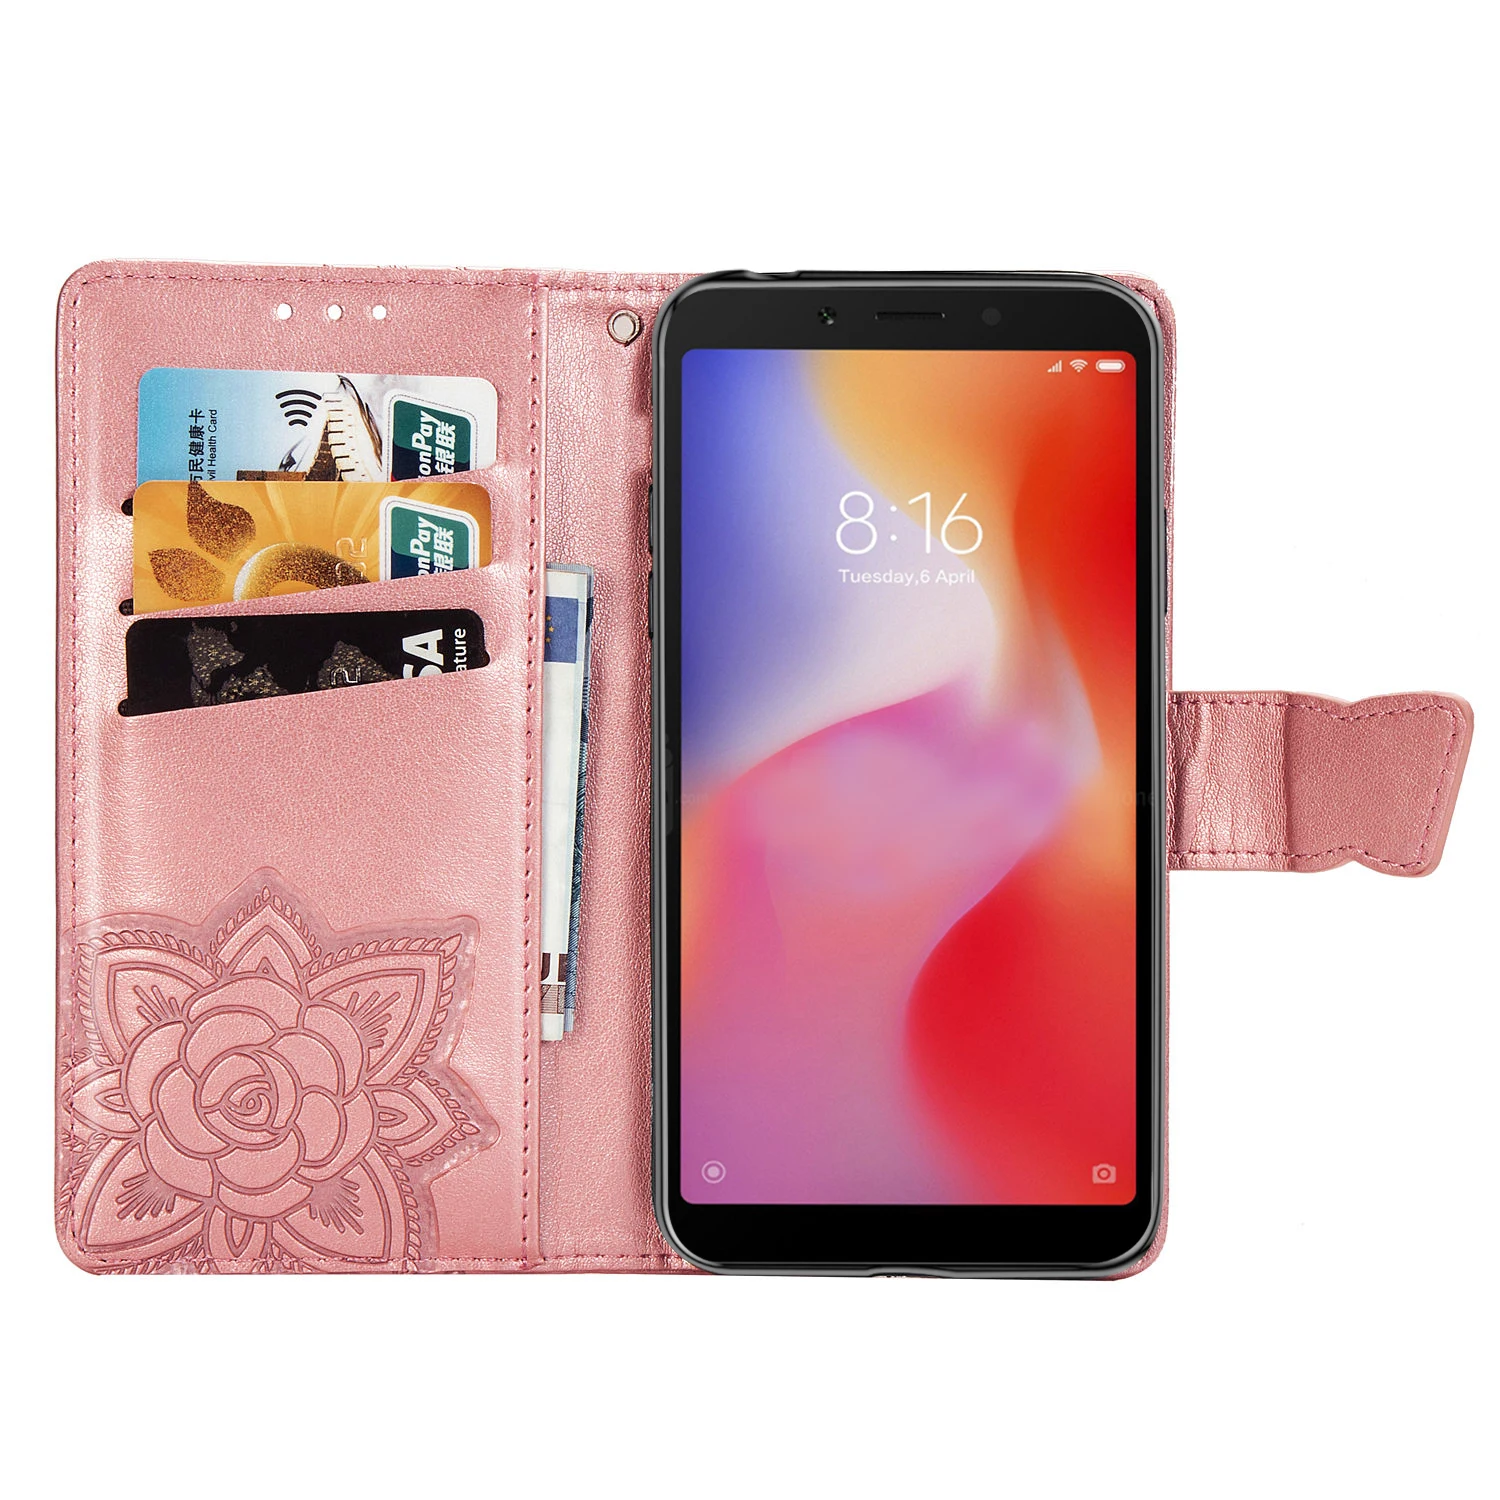 Phone Case Xiomi Redmi 6A Case for Xiaomi Redmi Note 6 Pro Cover Leather Wallet Flip Book Case Xiomi Redmi 6a 6pro redmi6a Funda